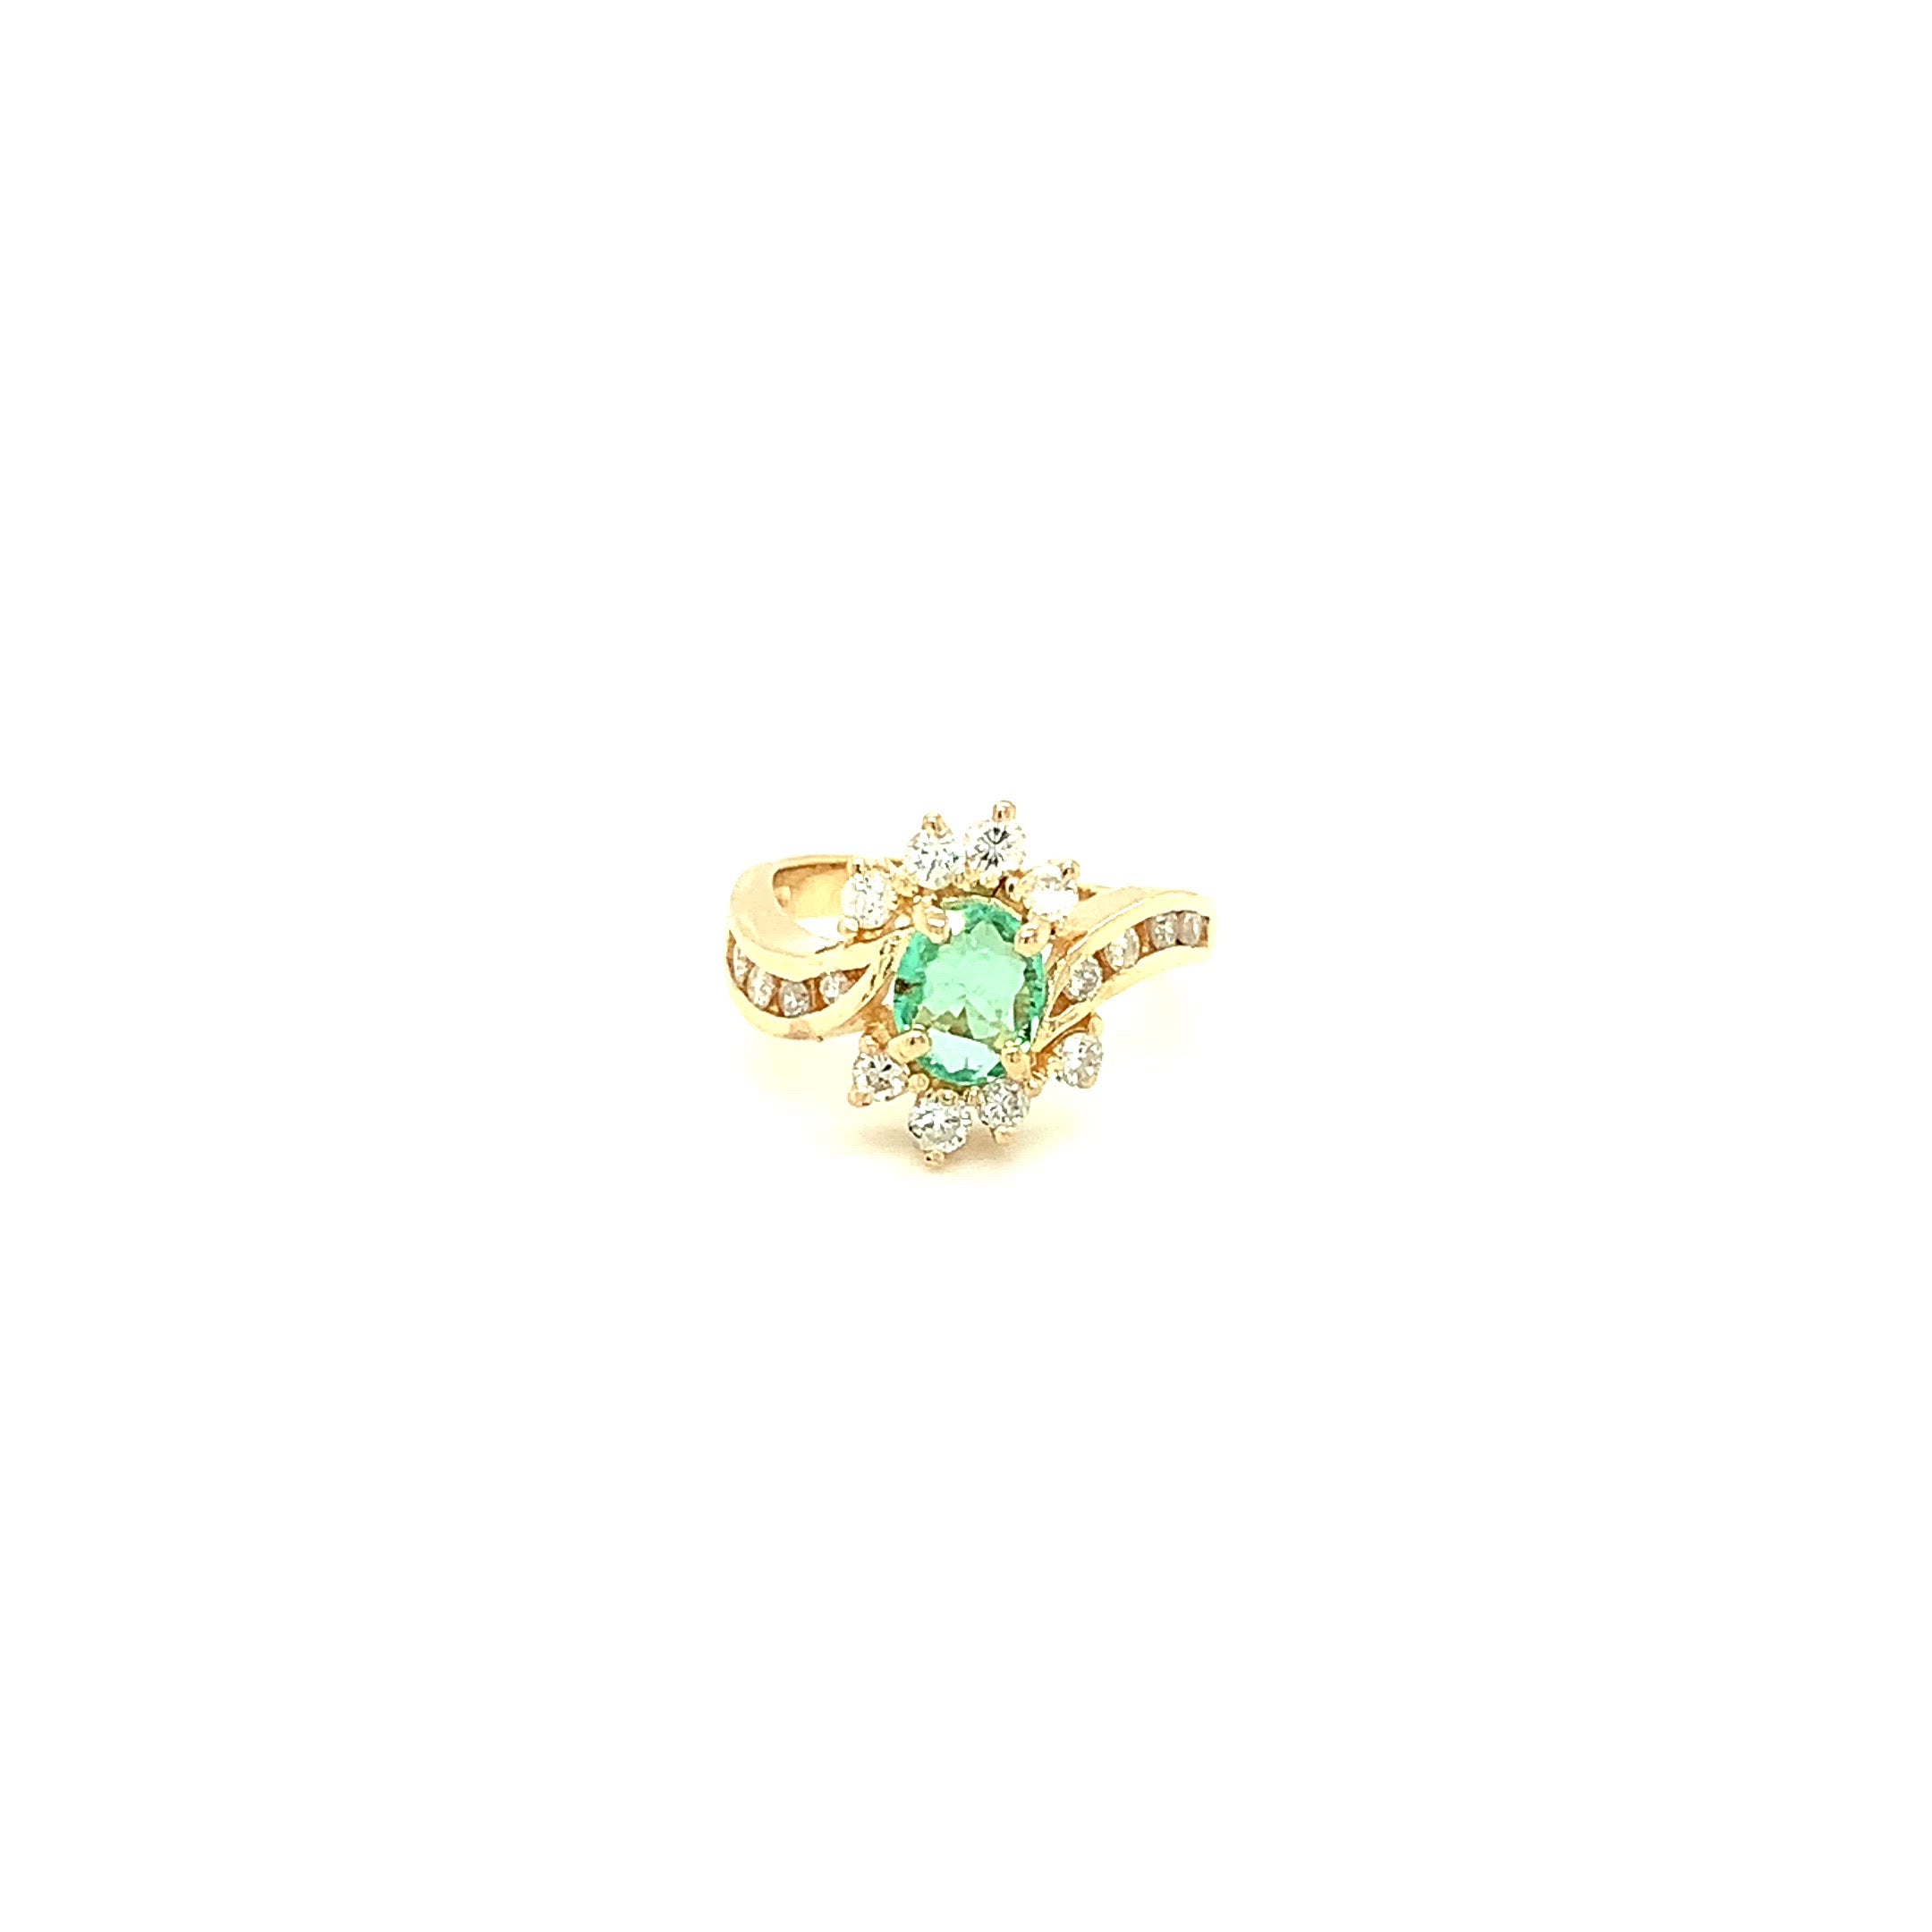 Natural Paraiba Tourmaline & Diamond Ring 14K Solid Gold 1.31tcw Fine Gemstone Women's Ring Estate Jewelry Cluster Statement Ring